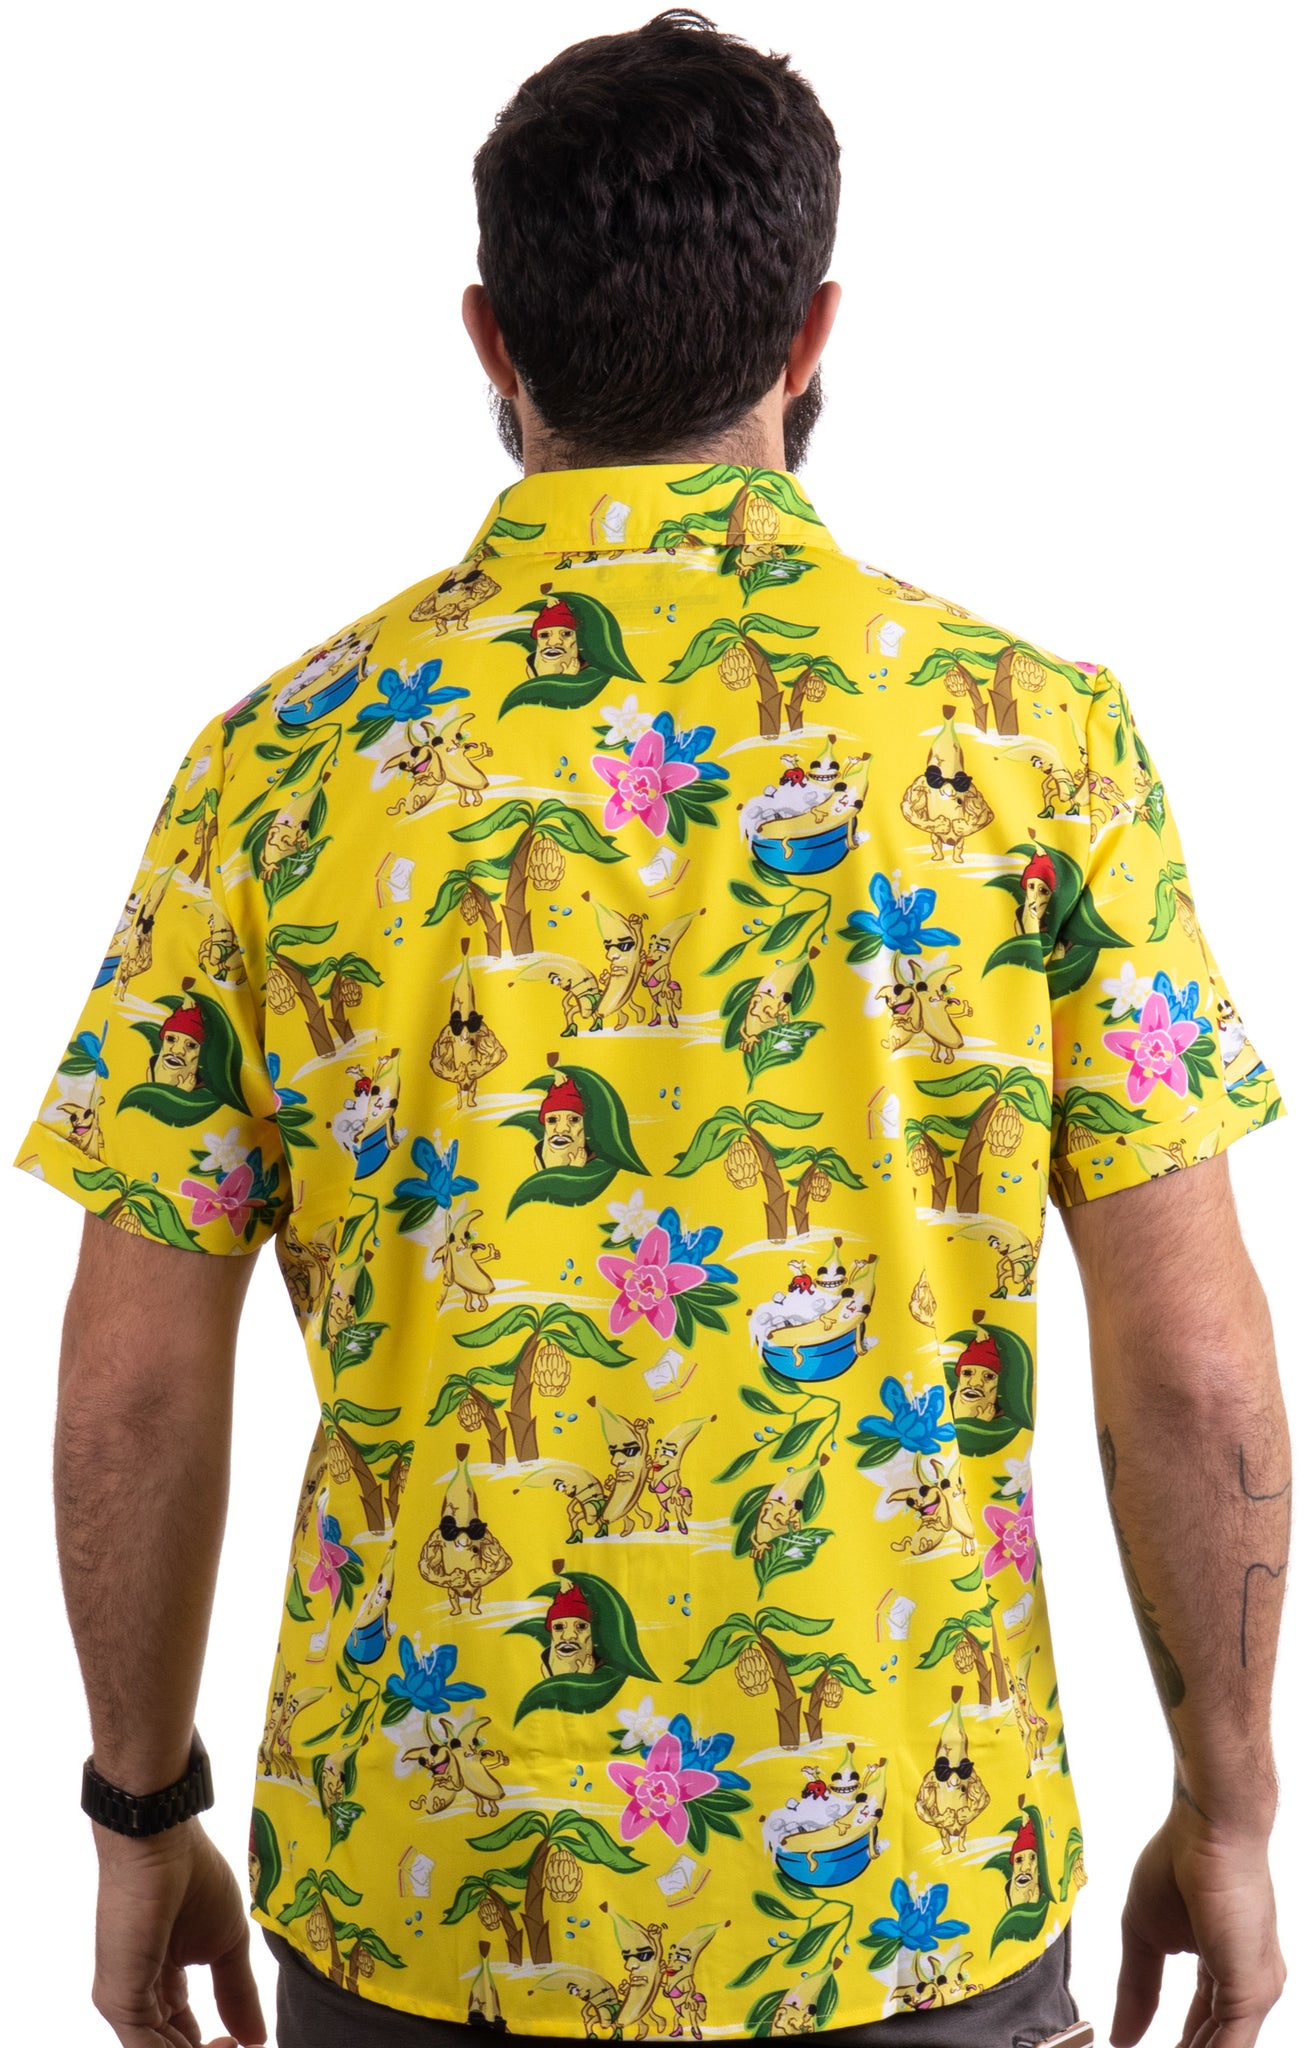 Pink Bananas Funny Hawaiian Shirt